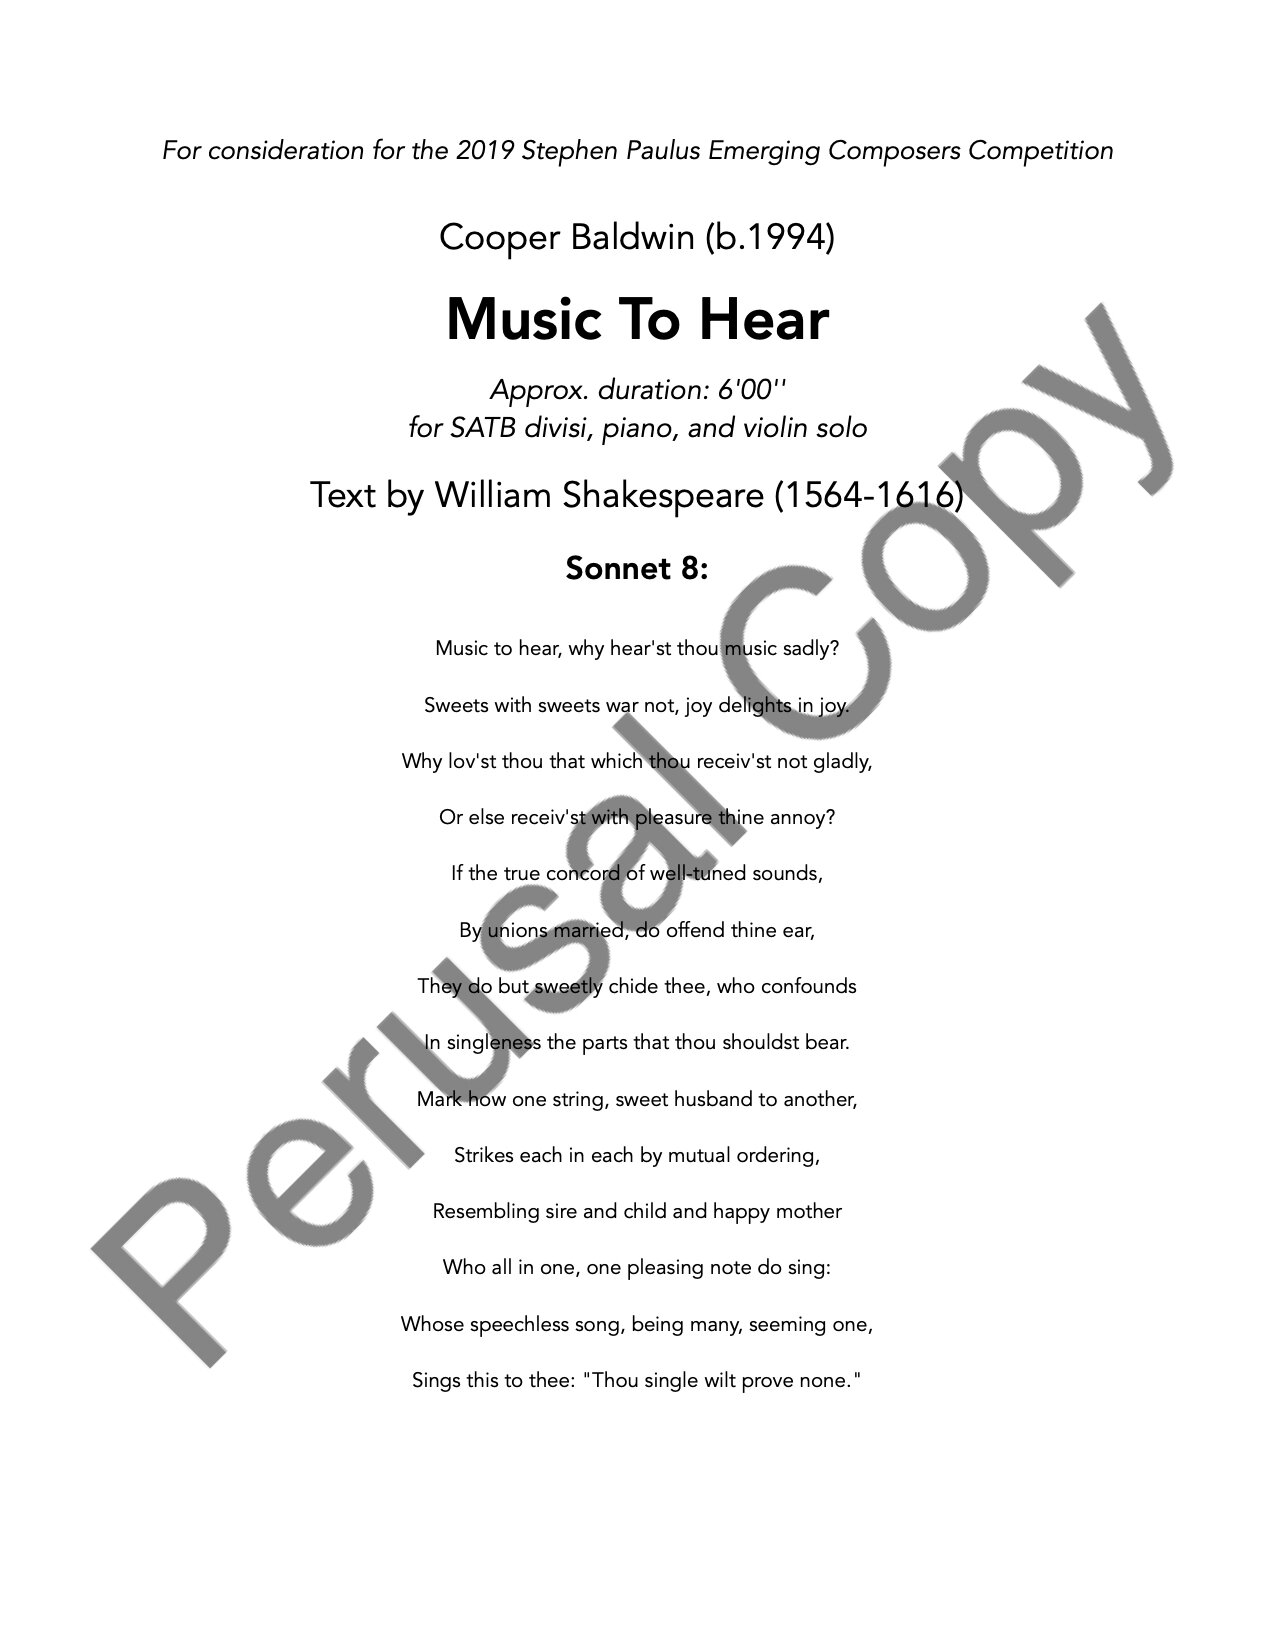 Music To Hear - Perusal Copy.jpg